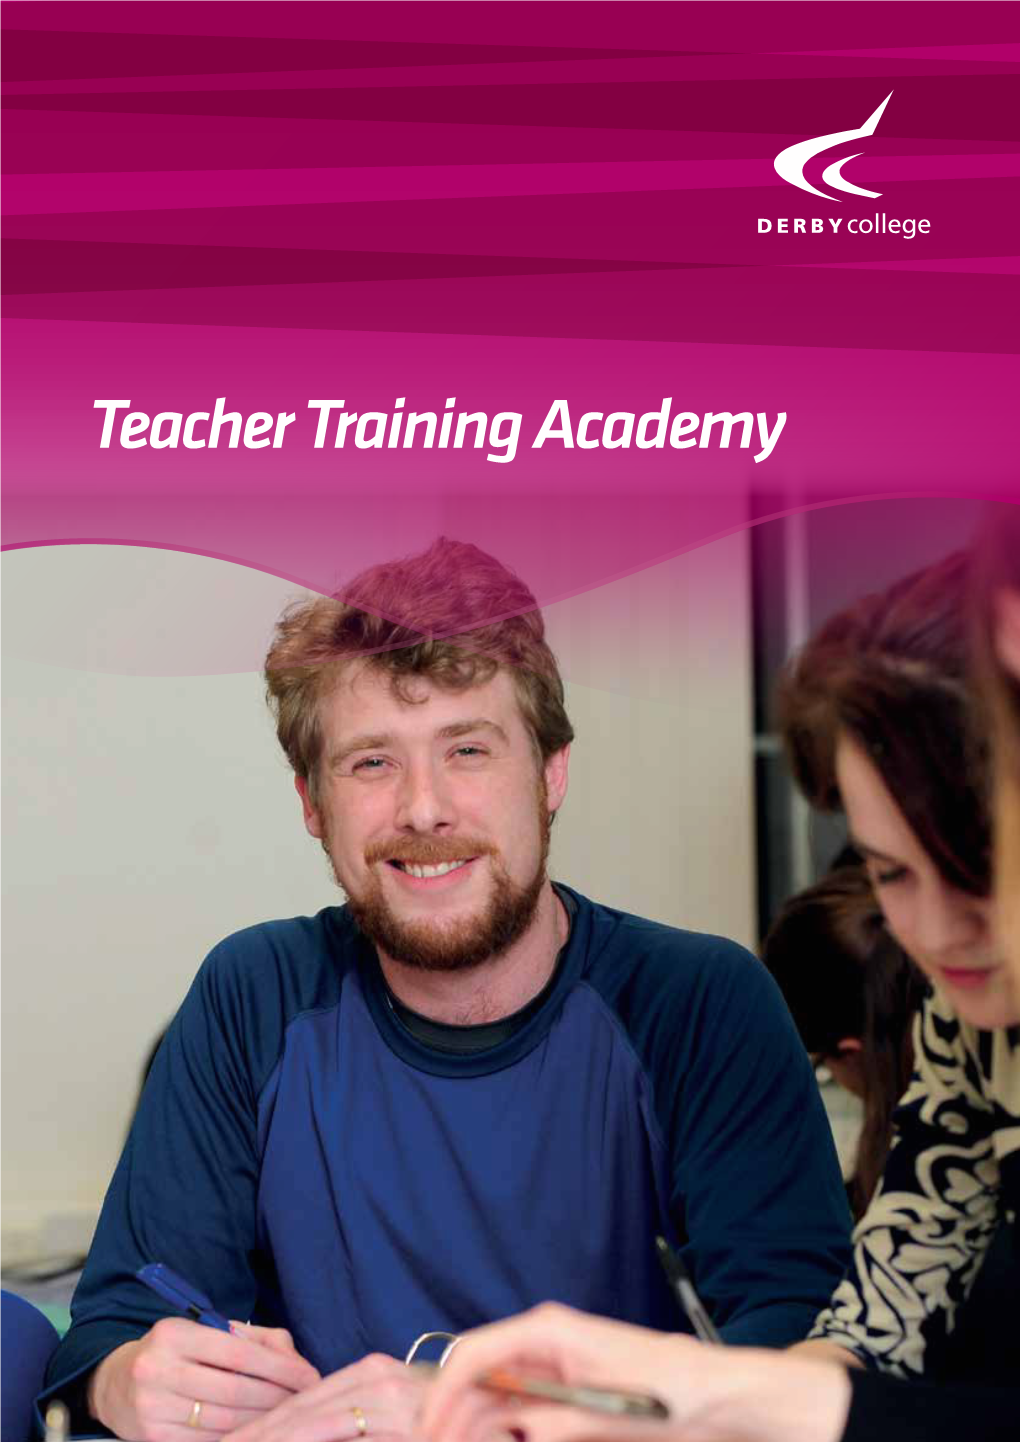 Teacher Training Academy Our Mission